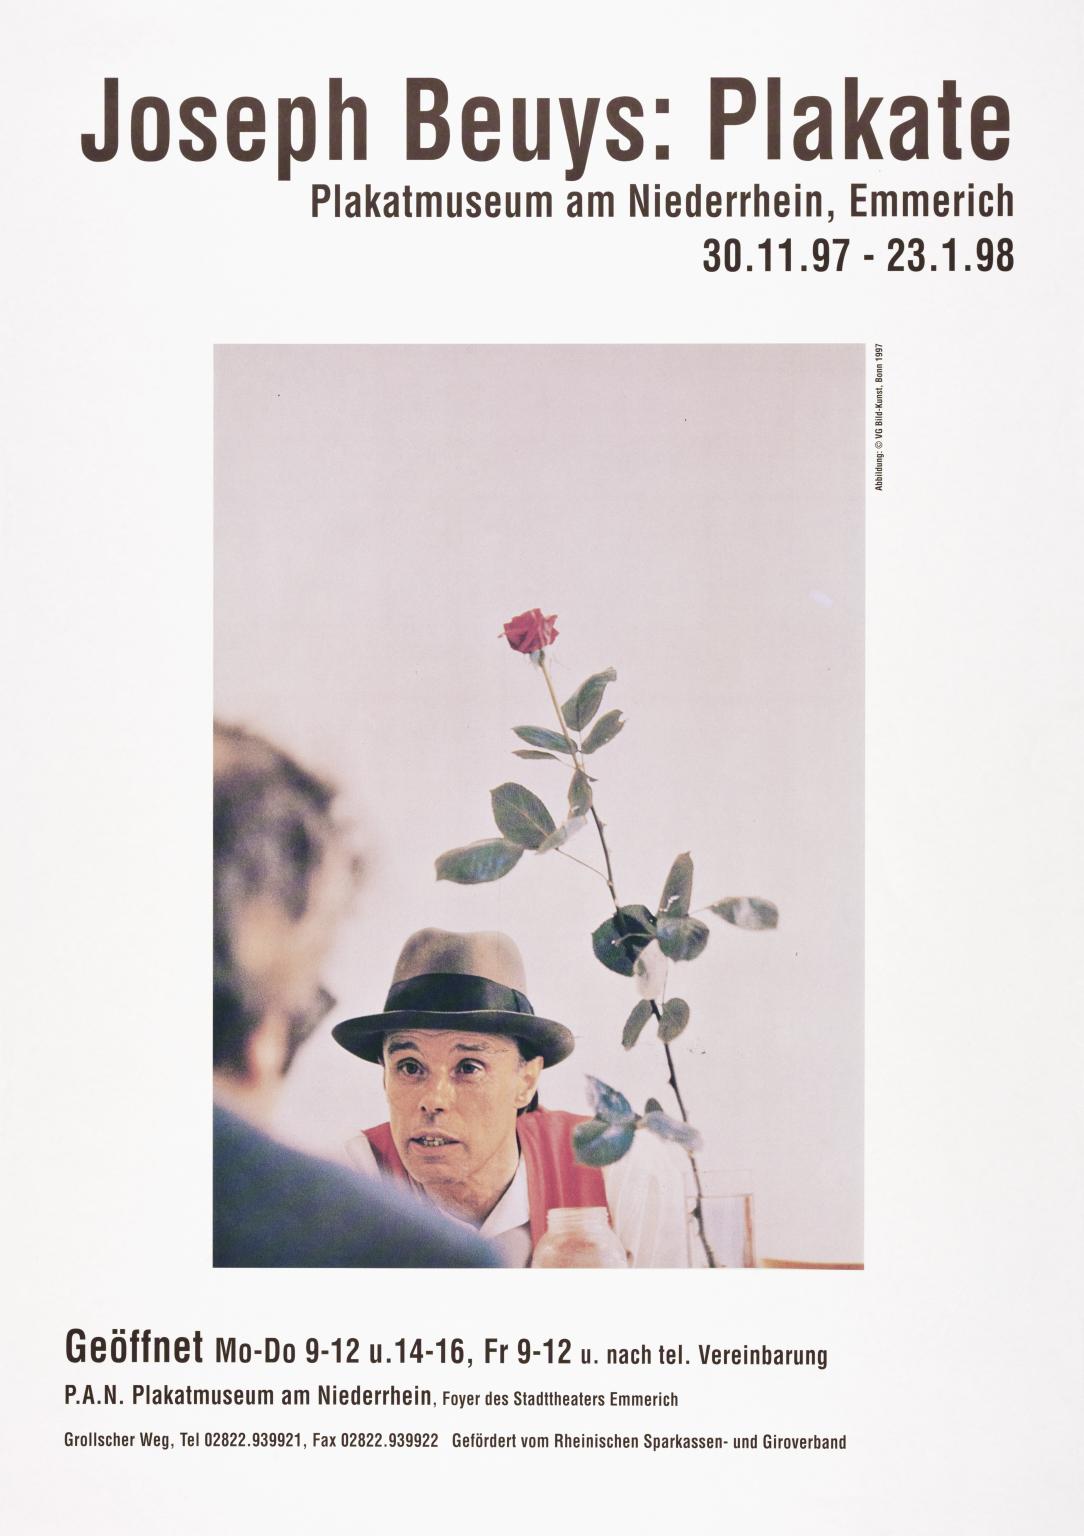 Joseph Beuys: Posters. Poster museum at Neiderrhein, Emmerich. 1998